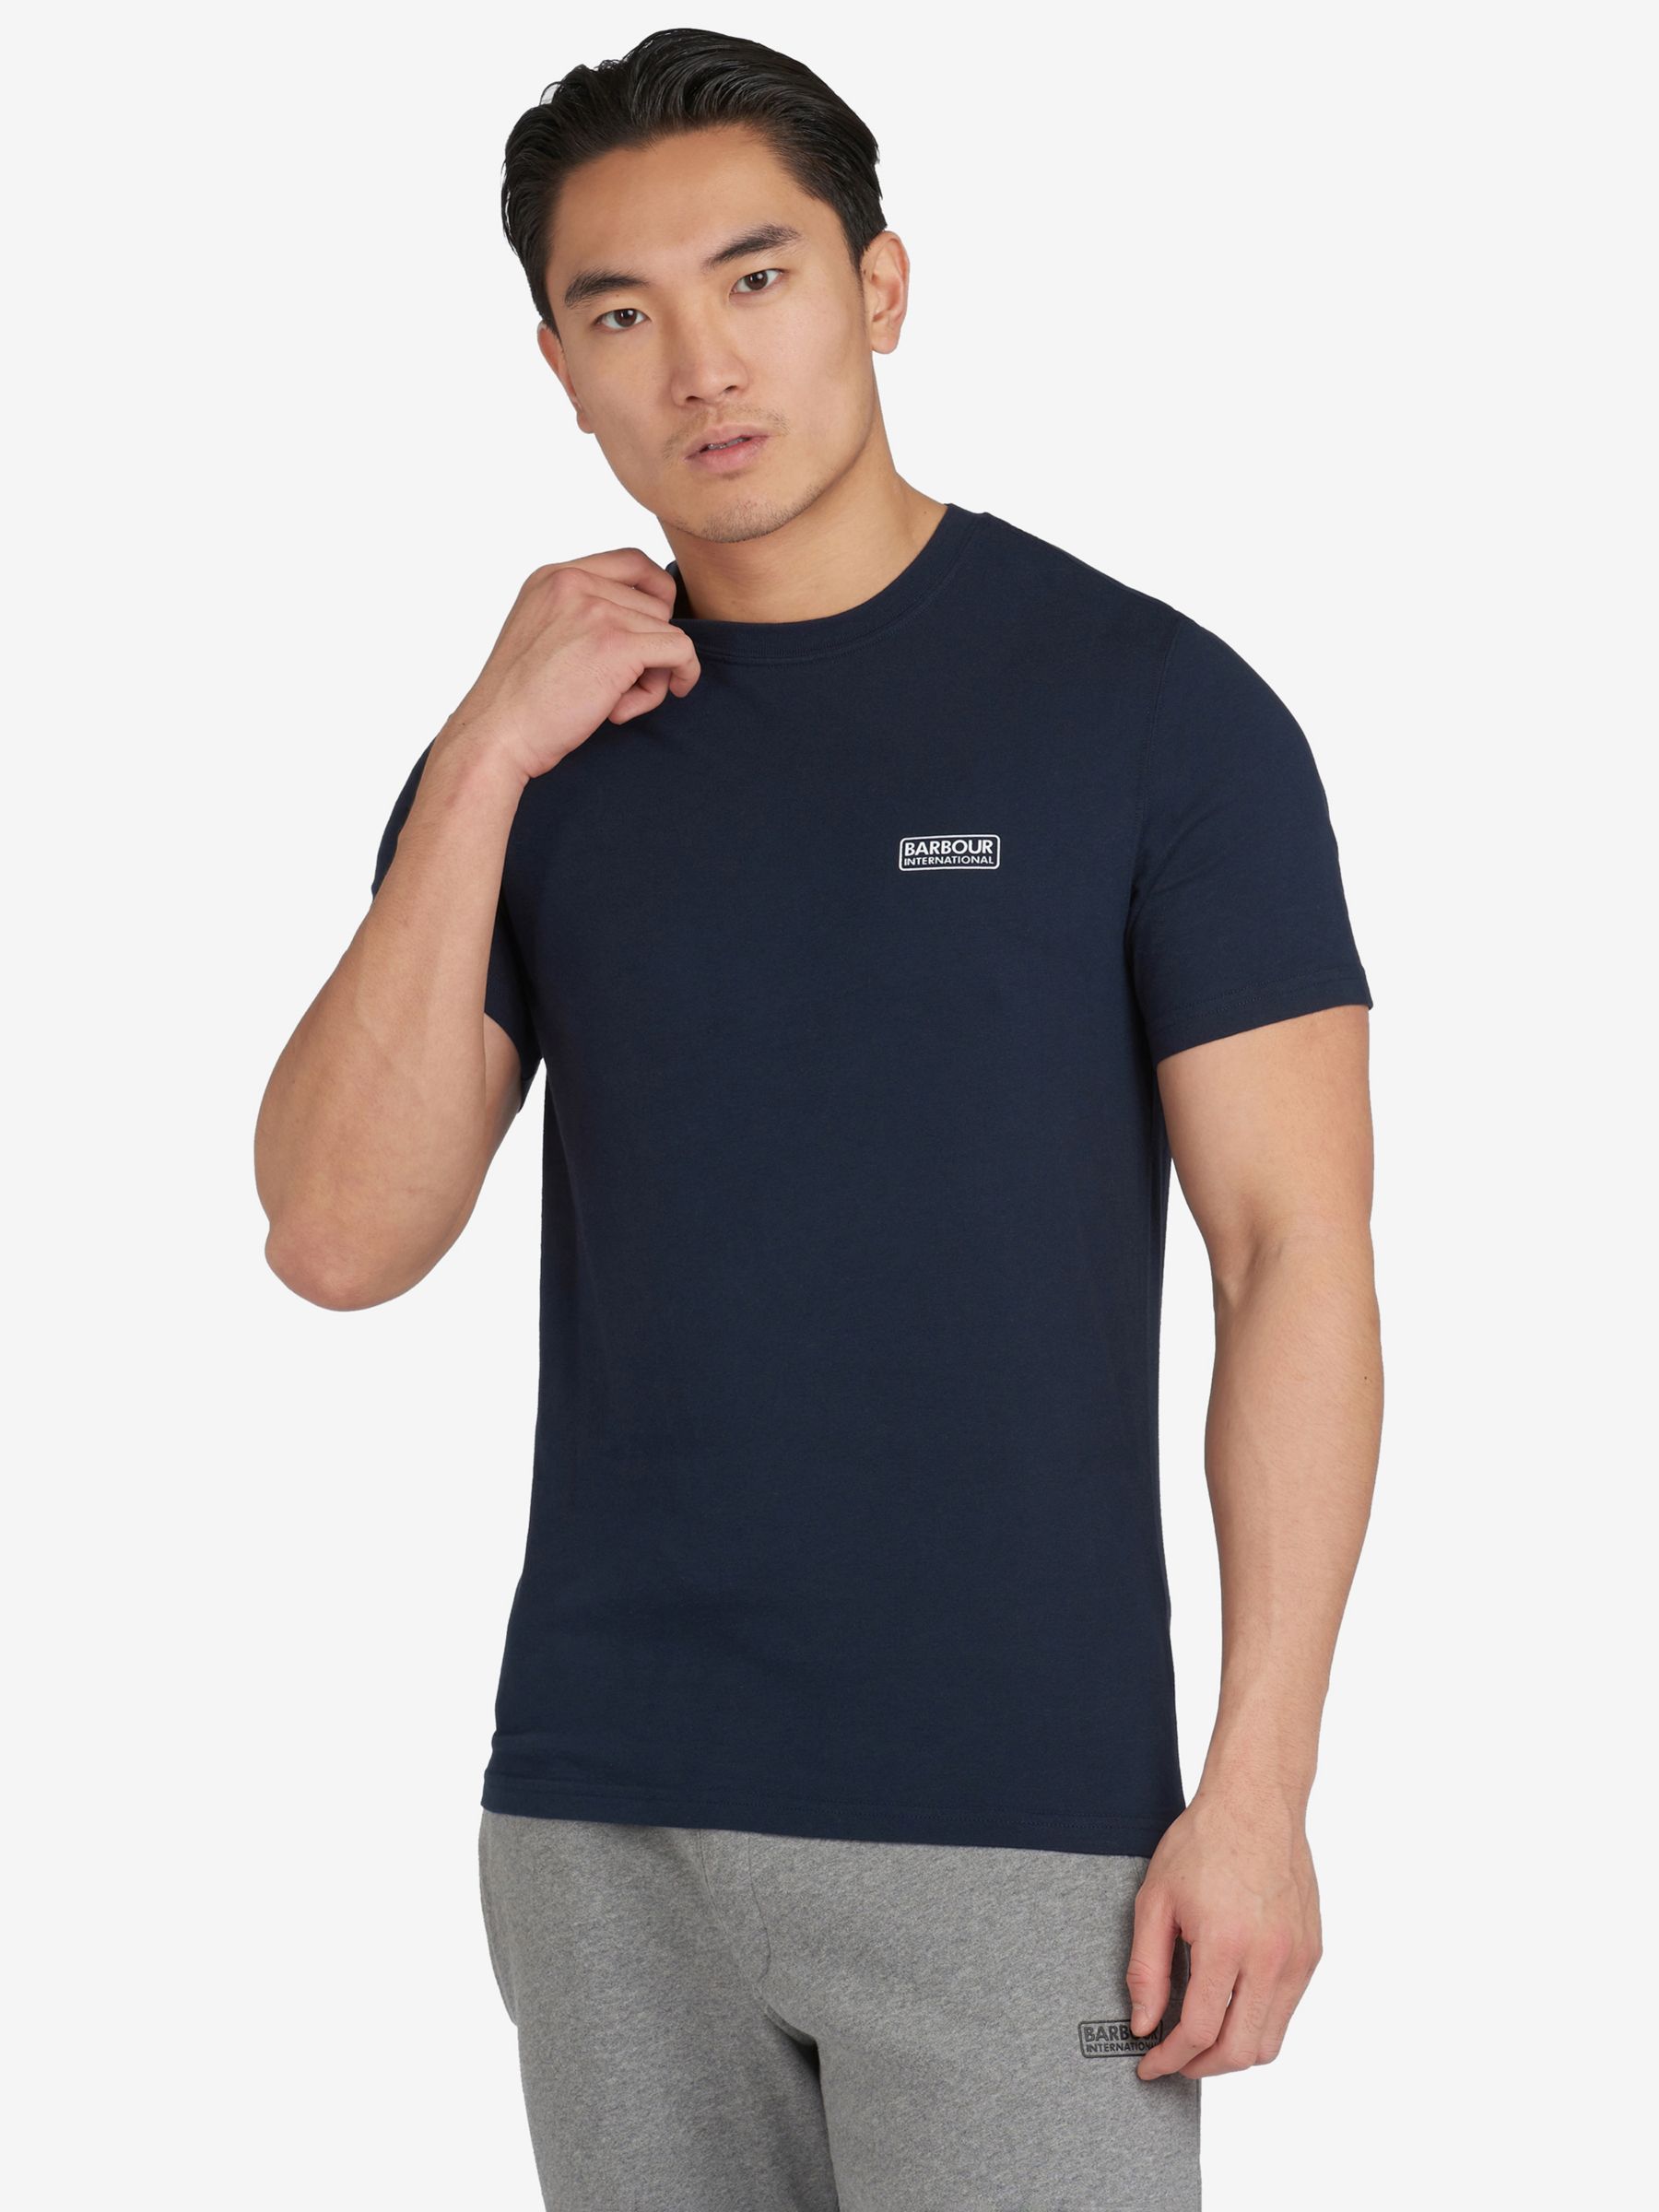 Barbour International Slim Fit Crew T-Shirt, Navy, S